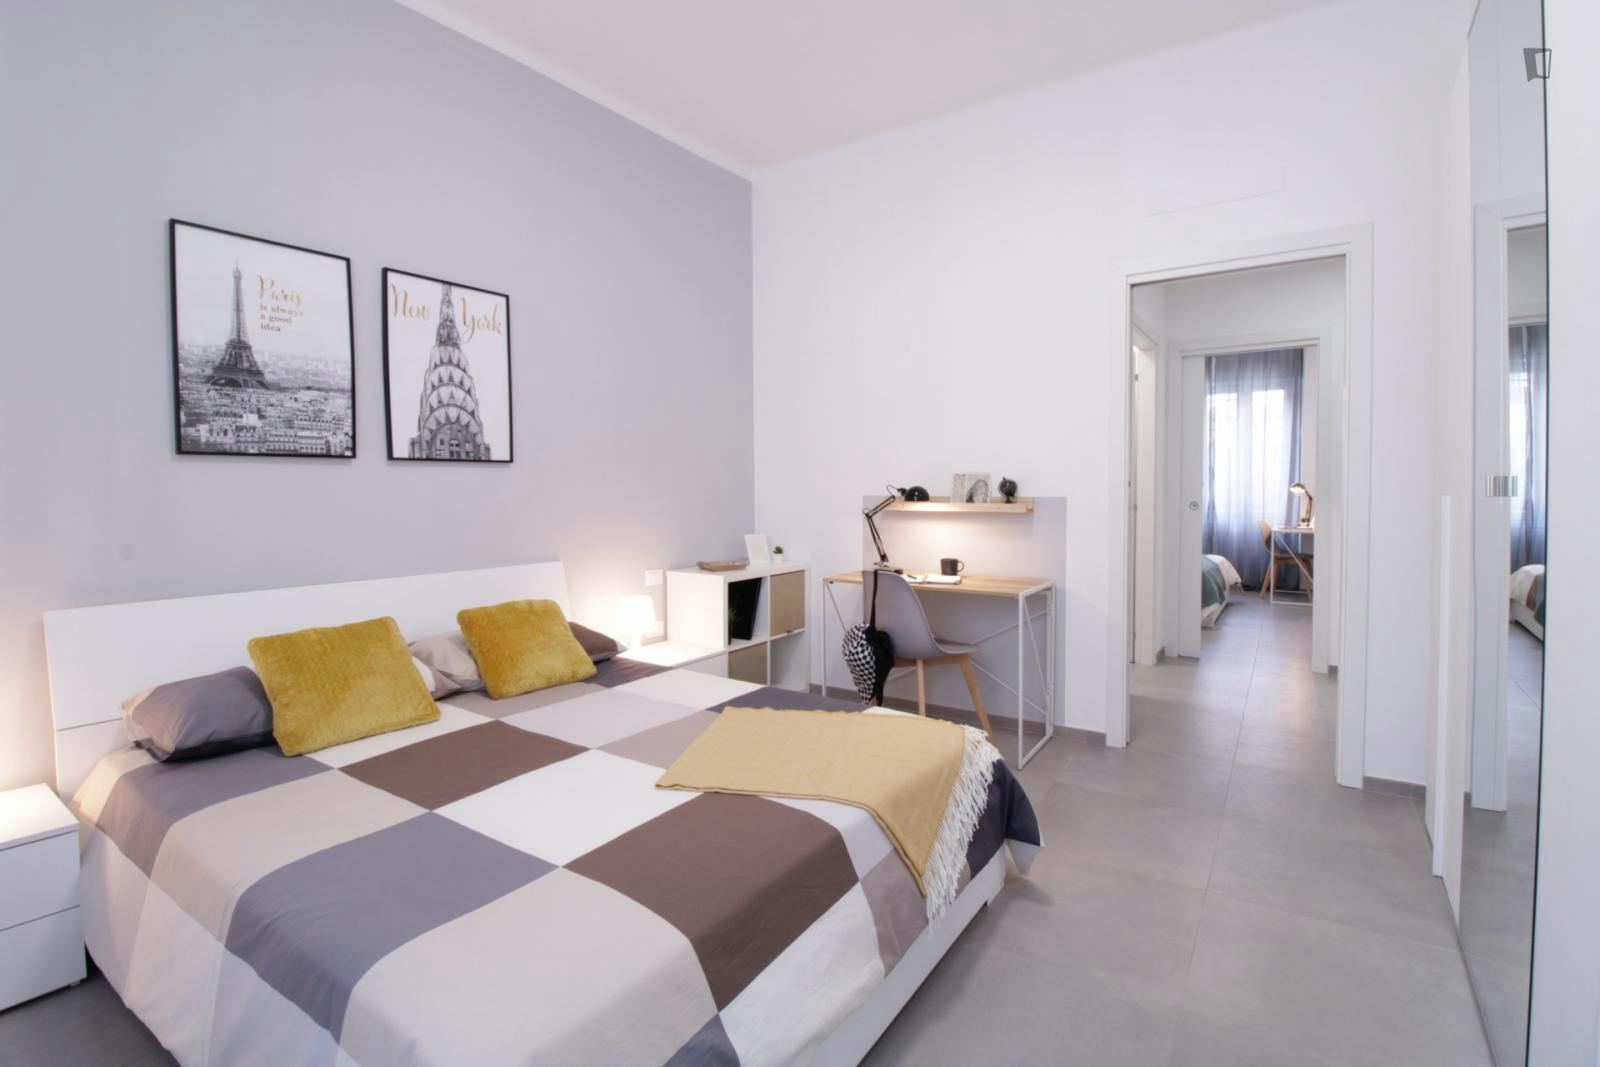 Inviting double bedroom near brescia station